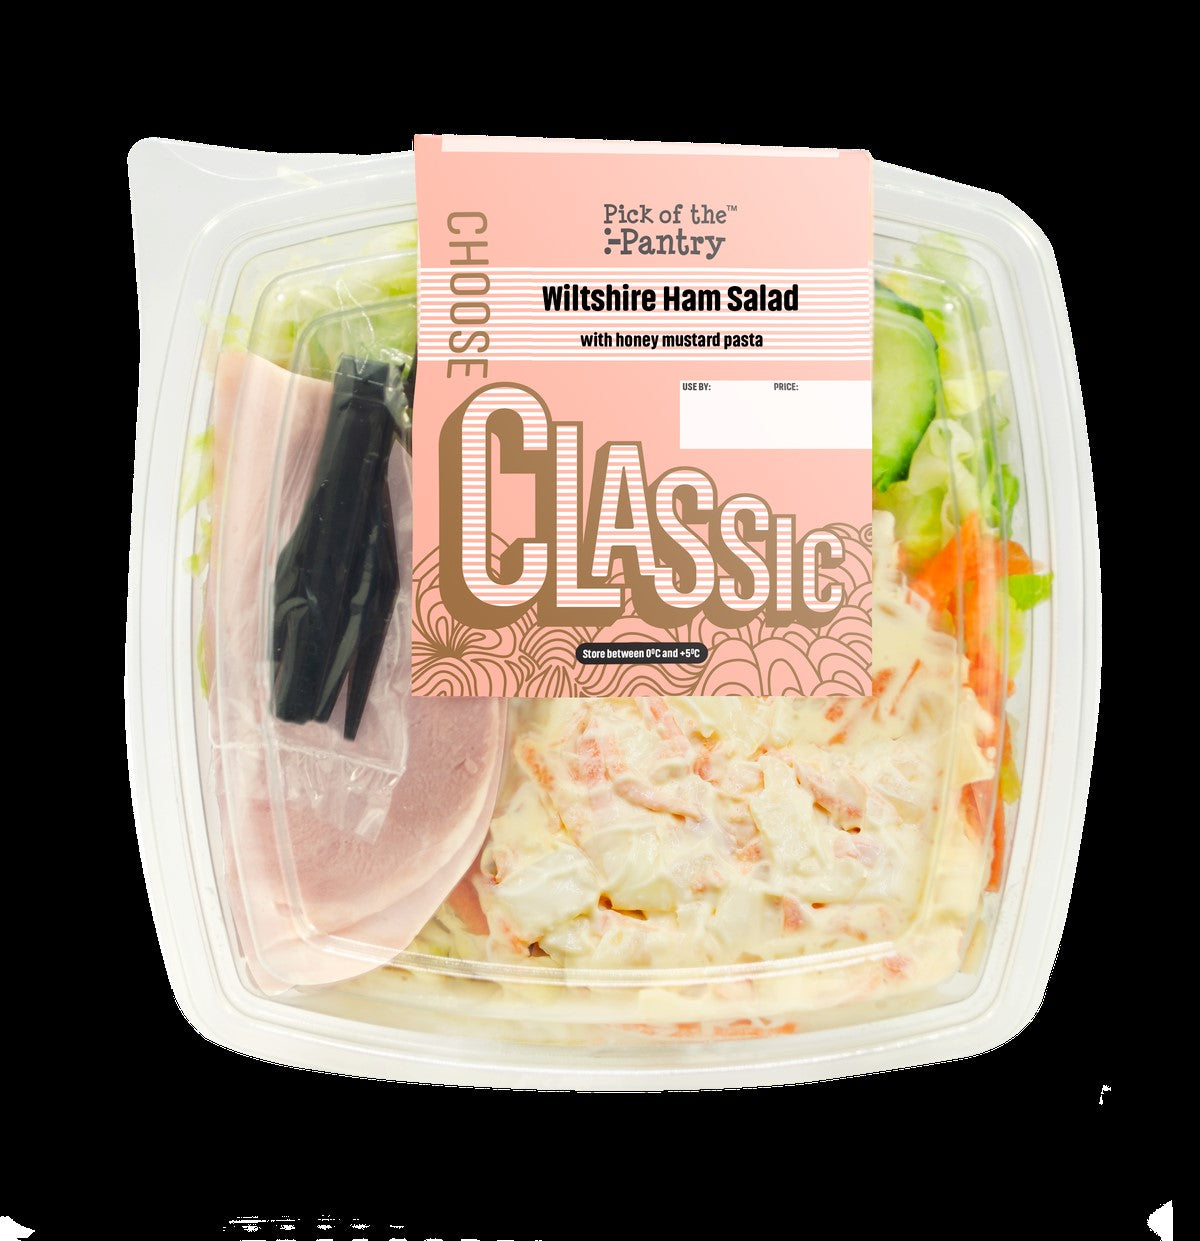 422630 Pick of the Pantry Wiltshire Ham Salad Box